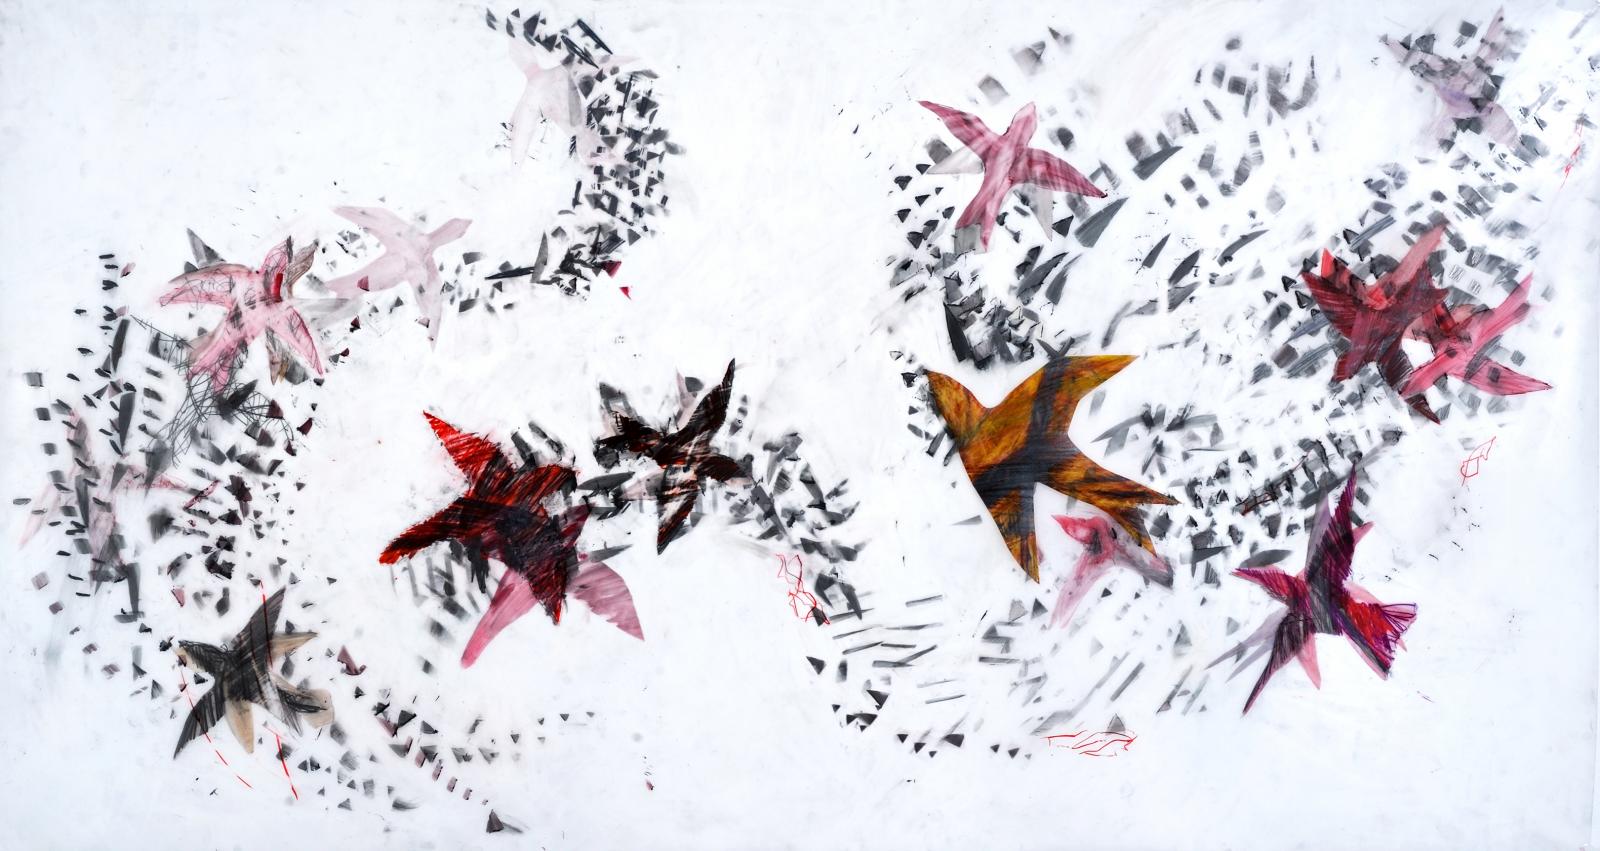 portrayal of flight patterns and sound patterns of birds.